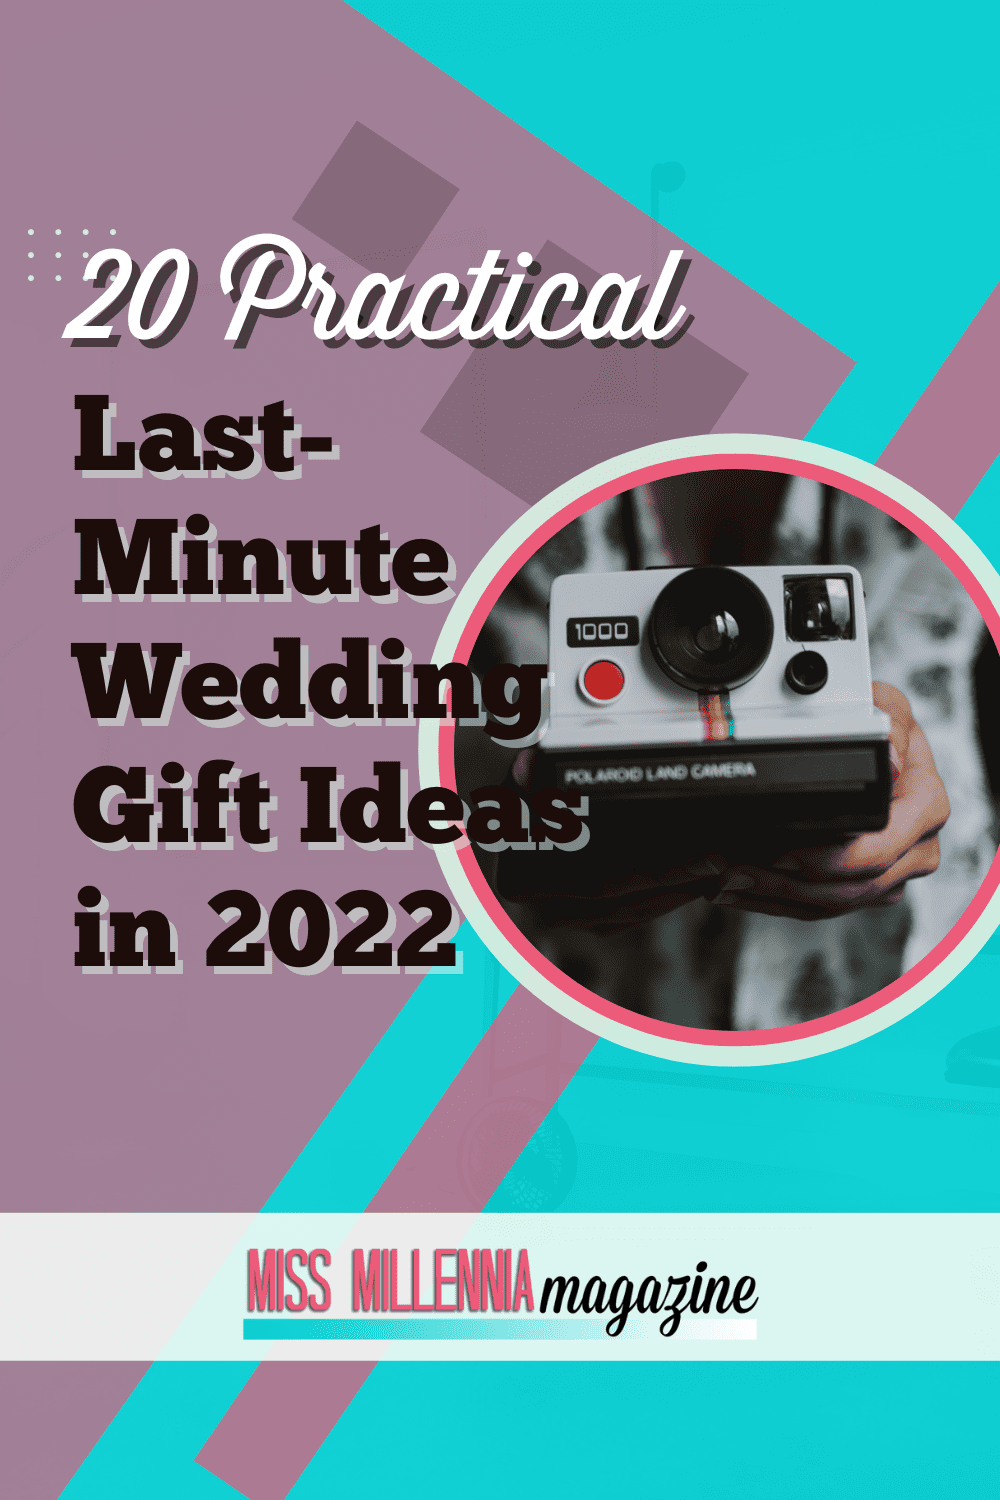 20 Practical Last-Minute Wedding Gift Ideas in 2022